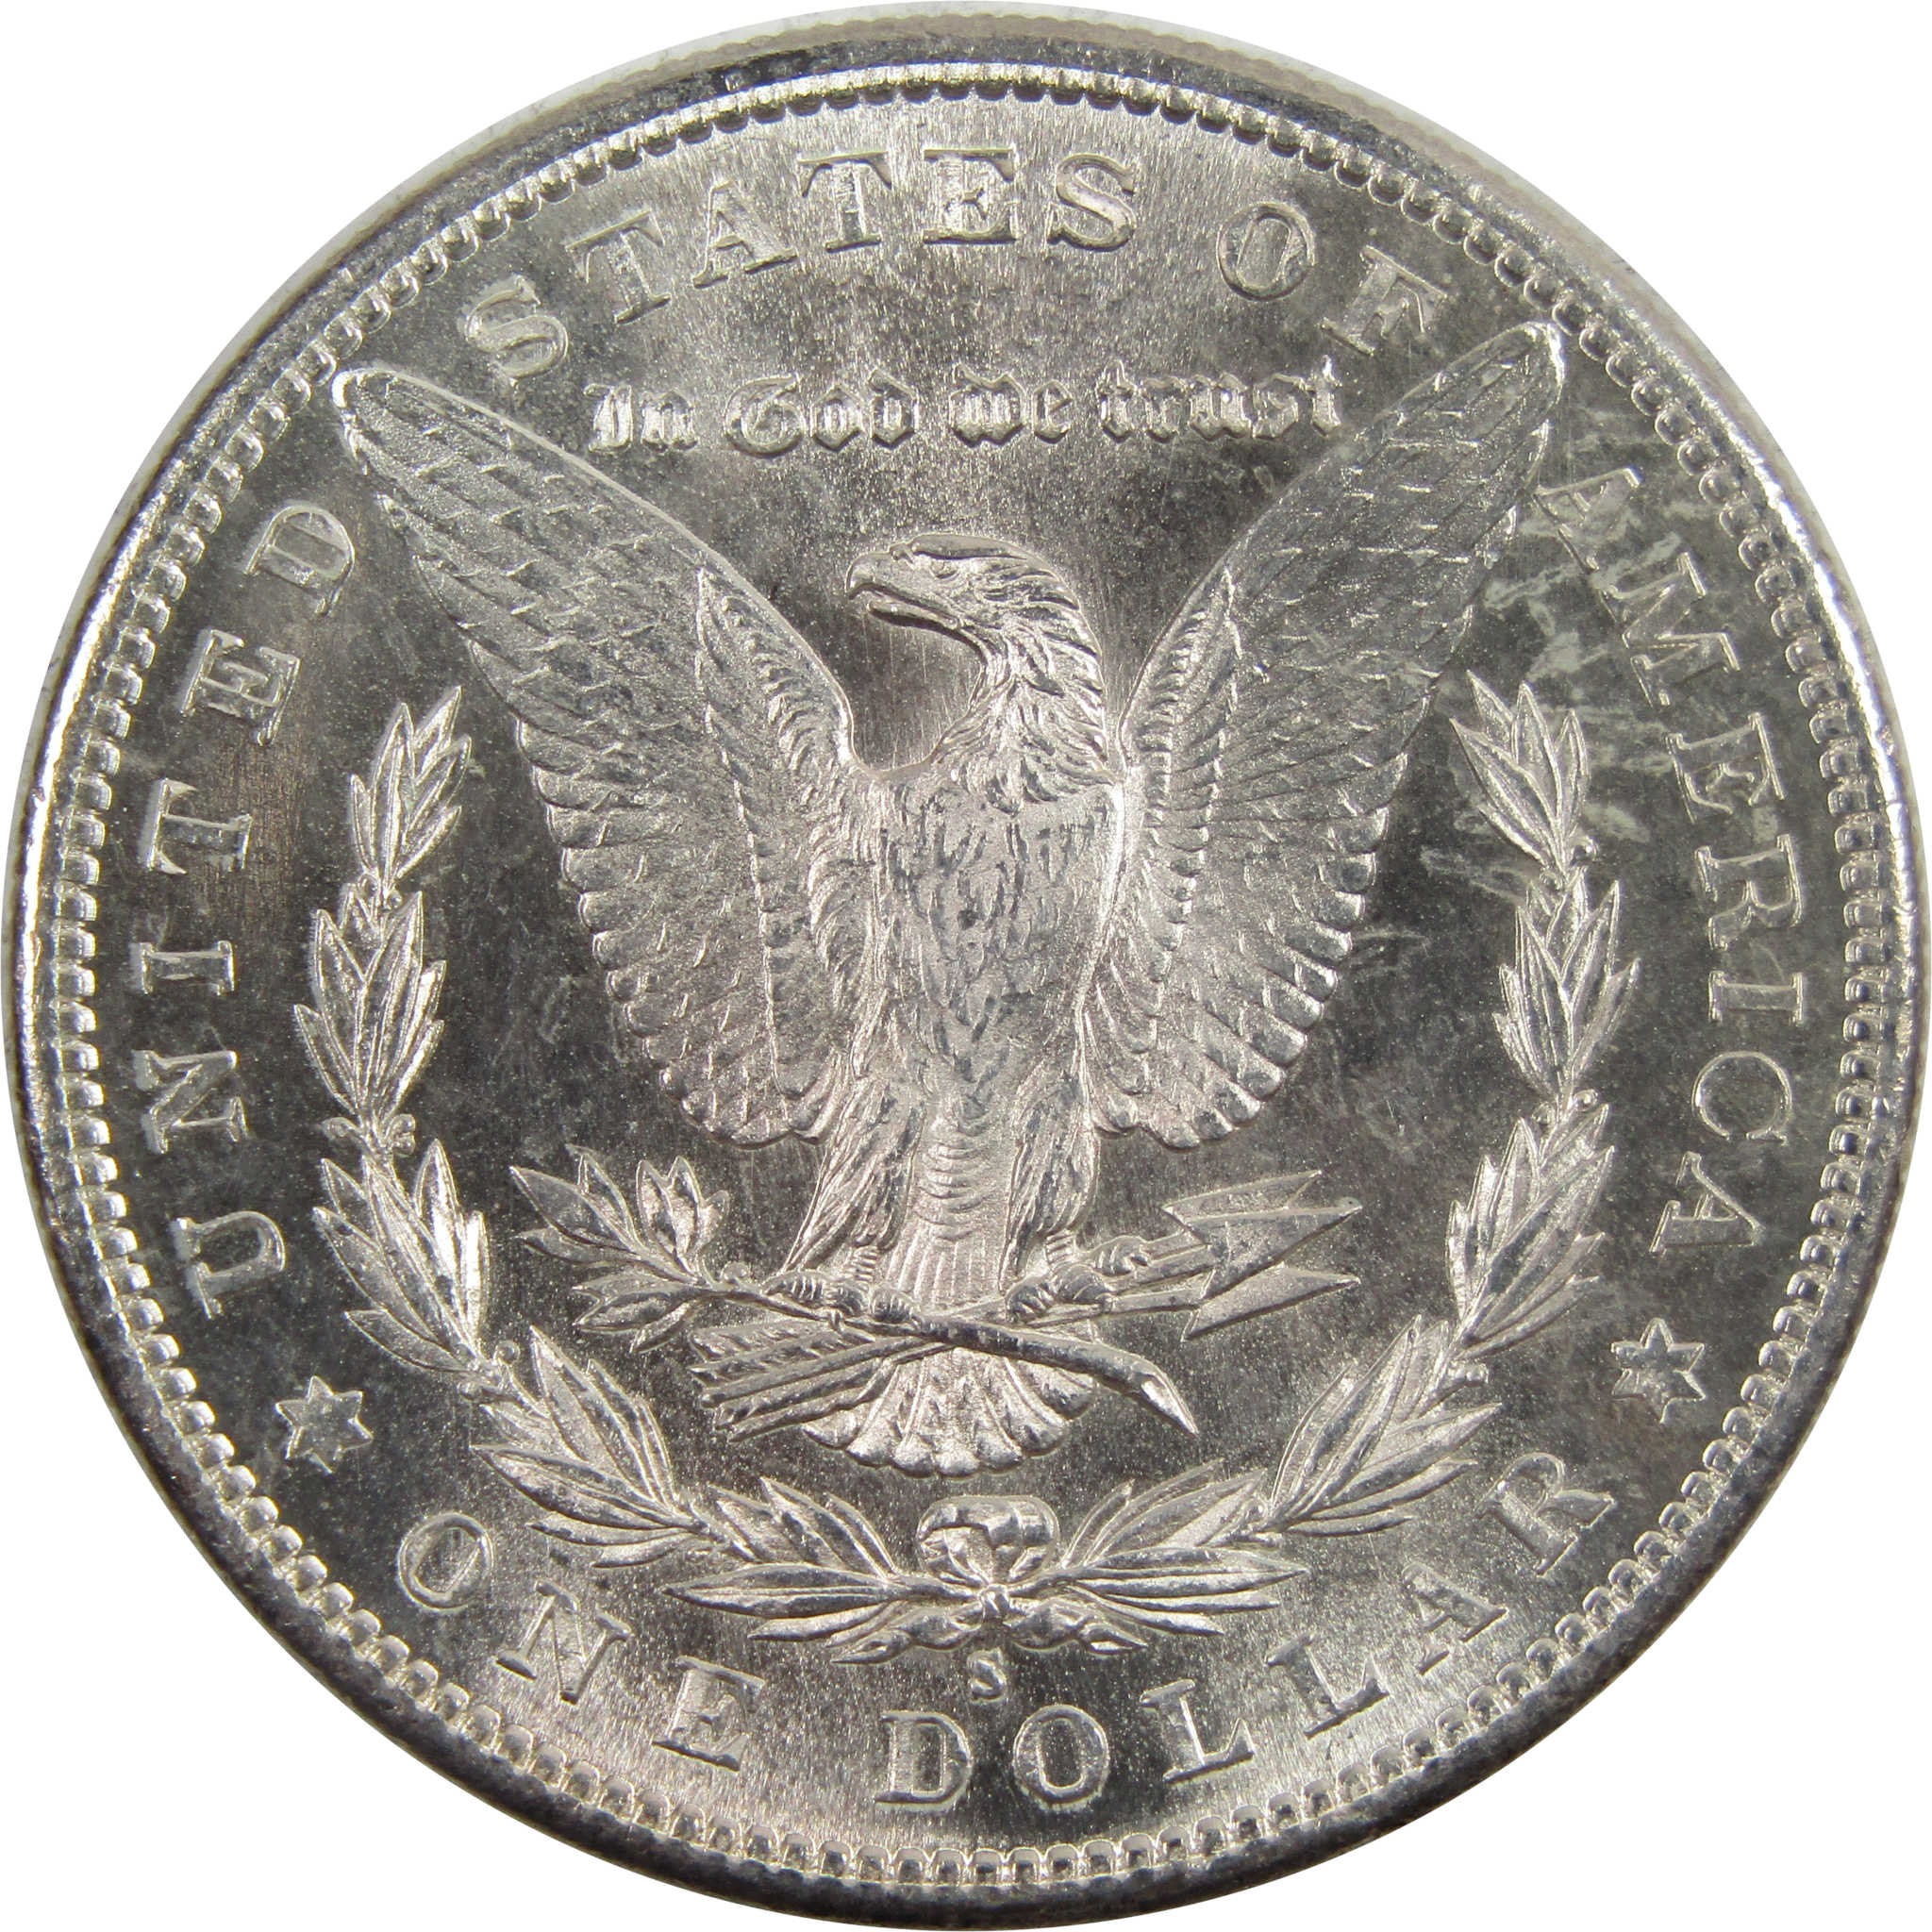 1881 S Morgan Dollar BU Uncirculated 90% Silver $1 Coin SKU:I5314 - Morgan coin - Morgan silver dollar - Morgan silver dollar for sale - Profile Coins &amp; Collectibles